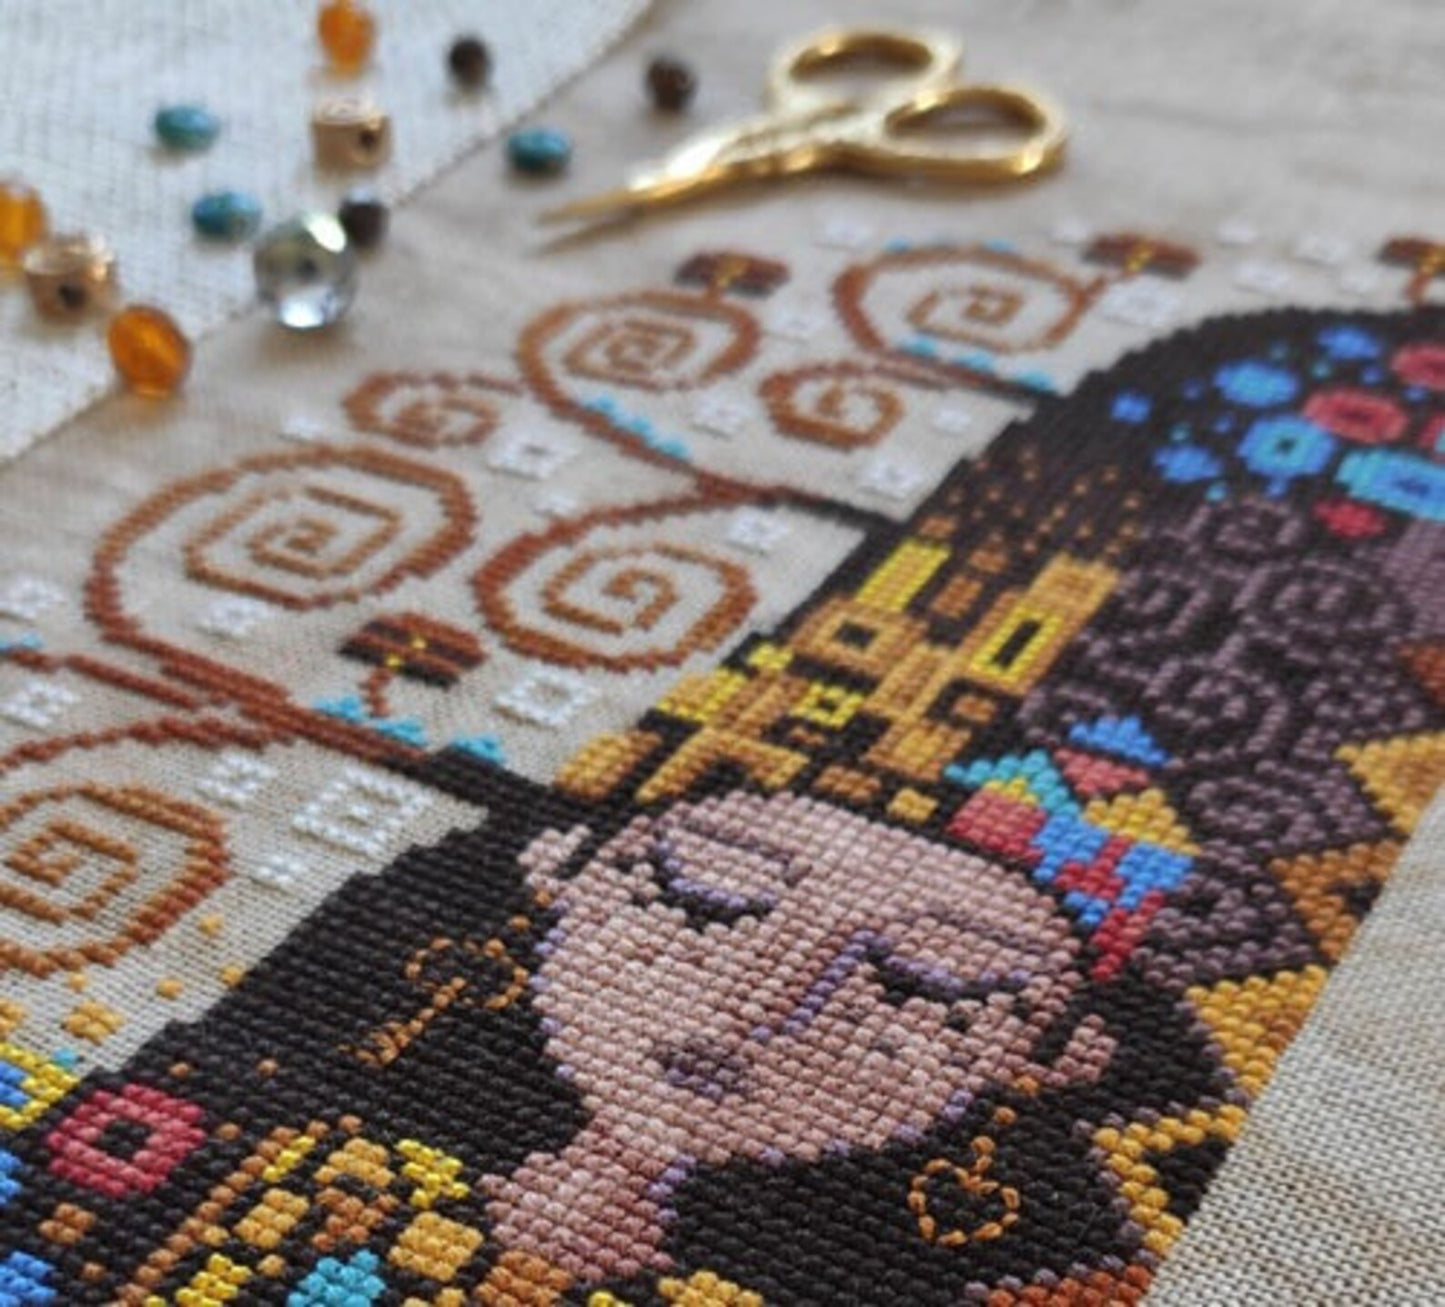 Barbara Ana Designs - Dreaming of Klimt